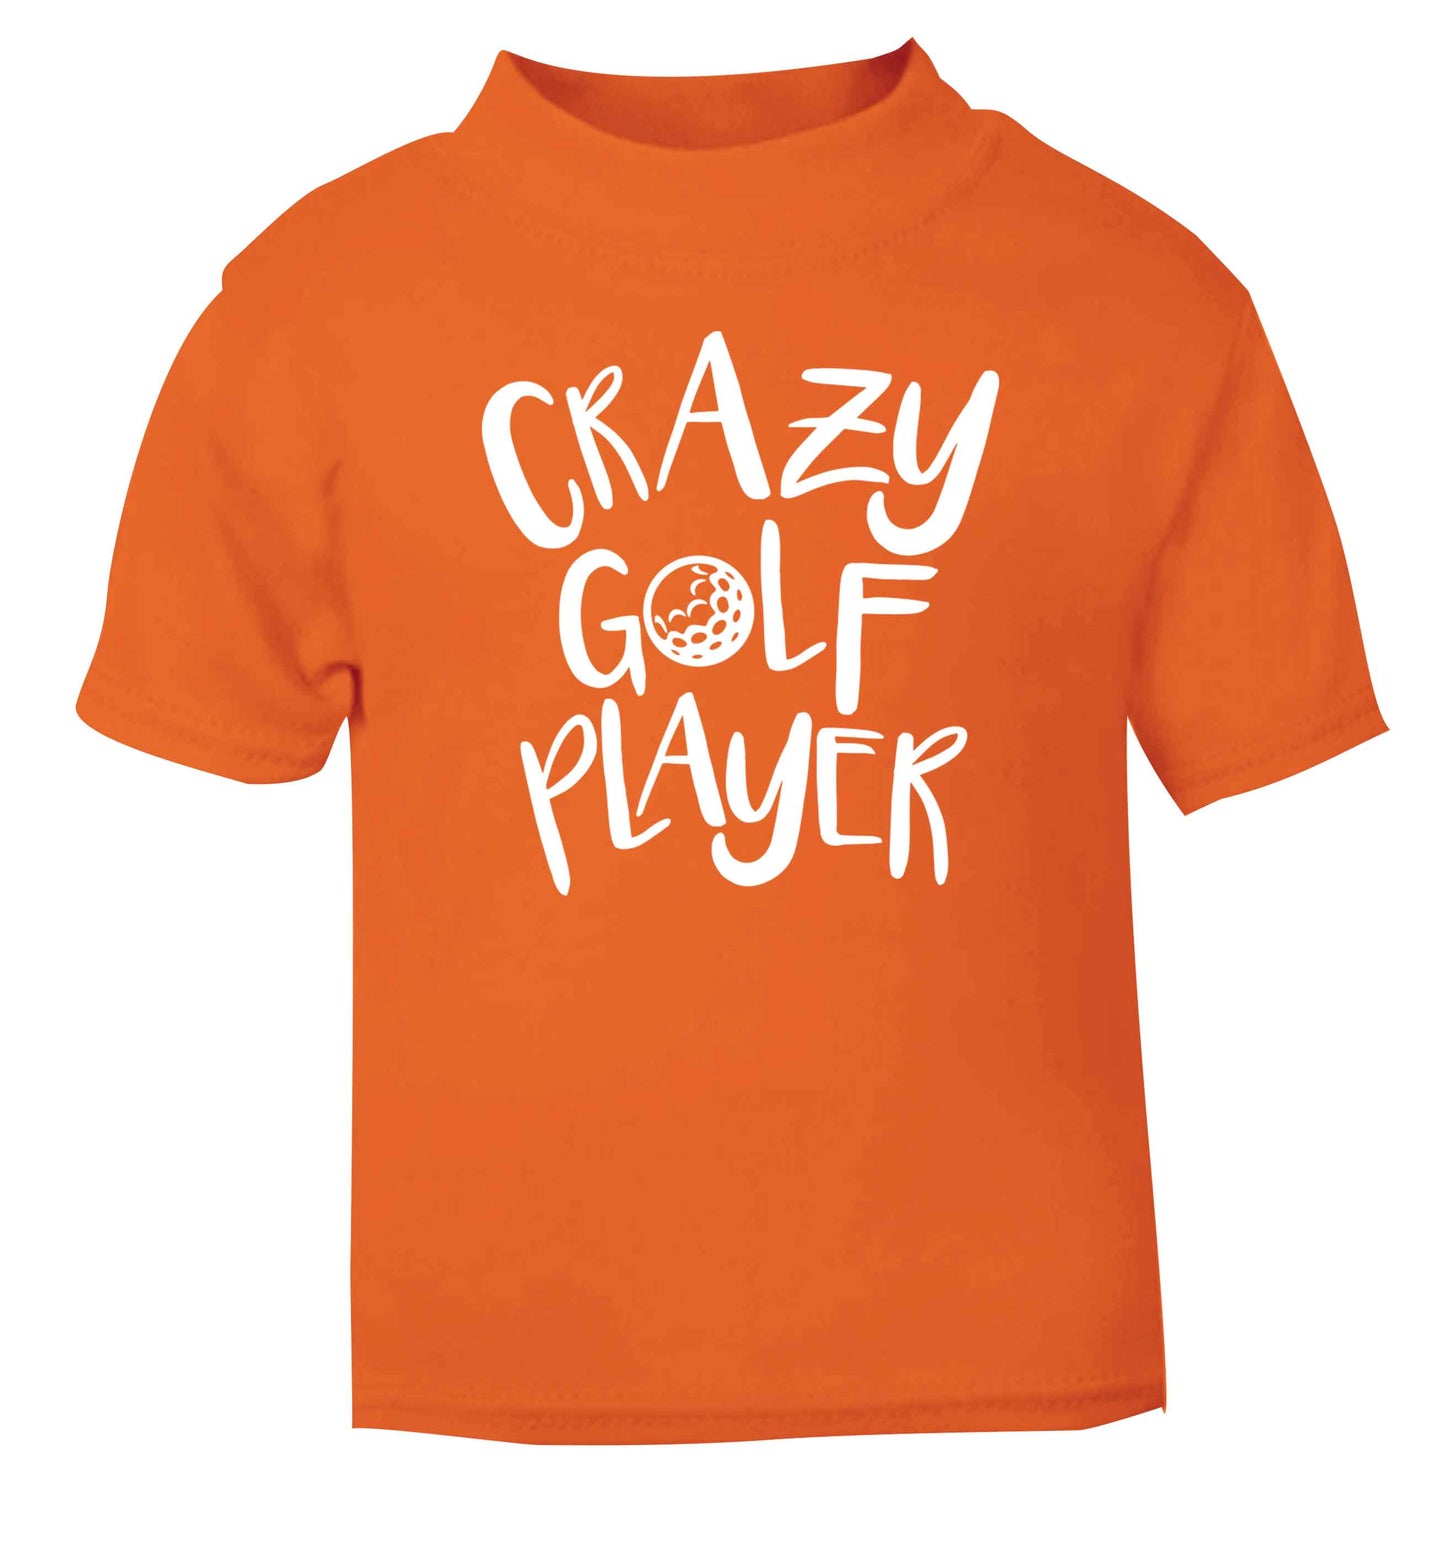 Crazy golf player orange Baby Toddler Tshirt 2 Years